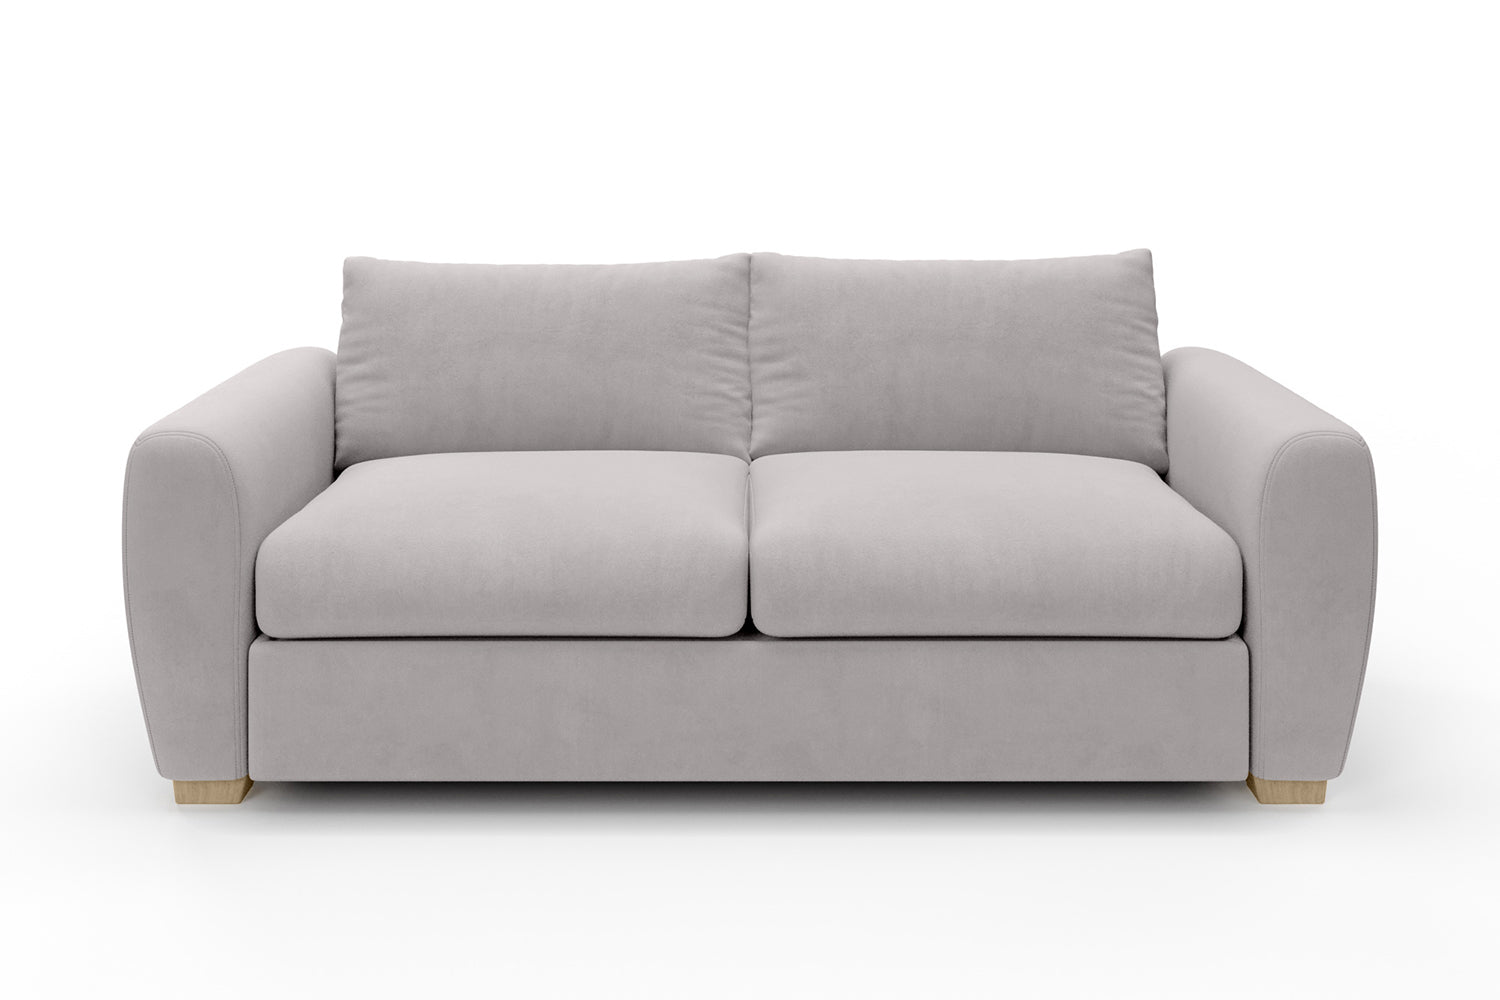 The Cloud Sundae - 3 Seater Sofa - Warm Grey